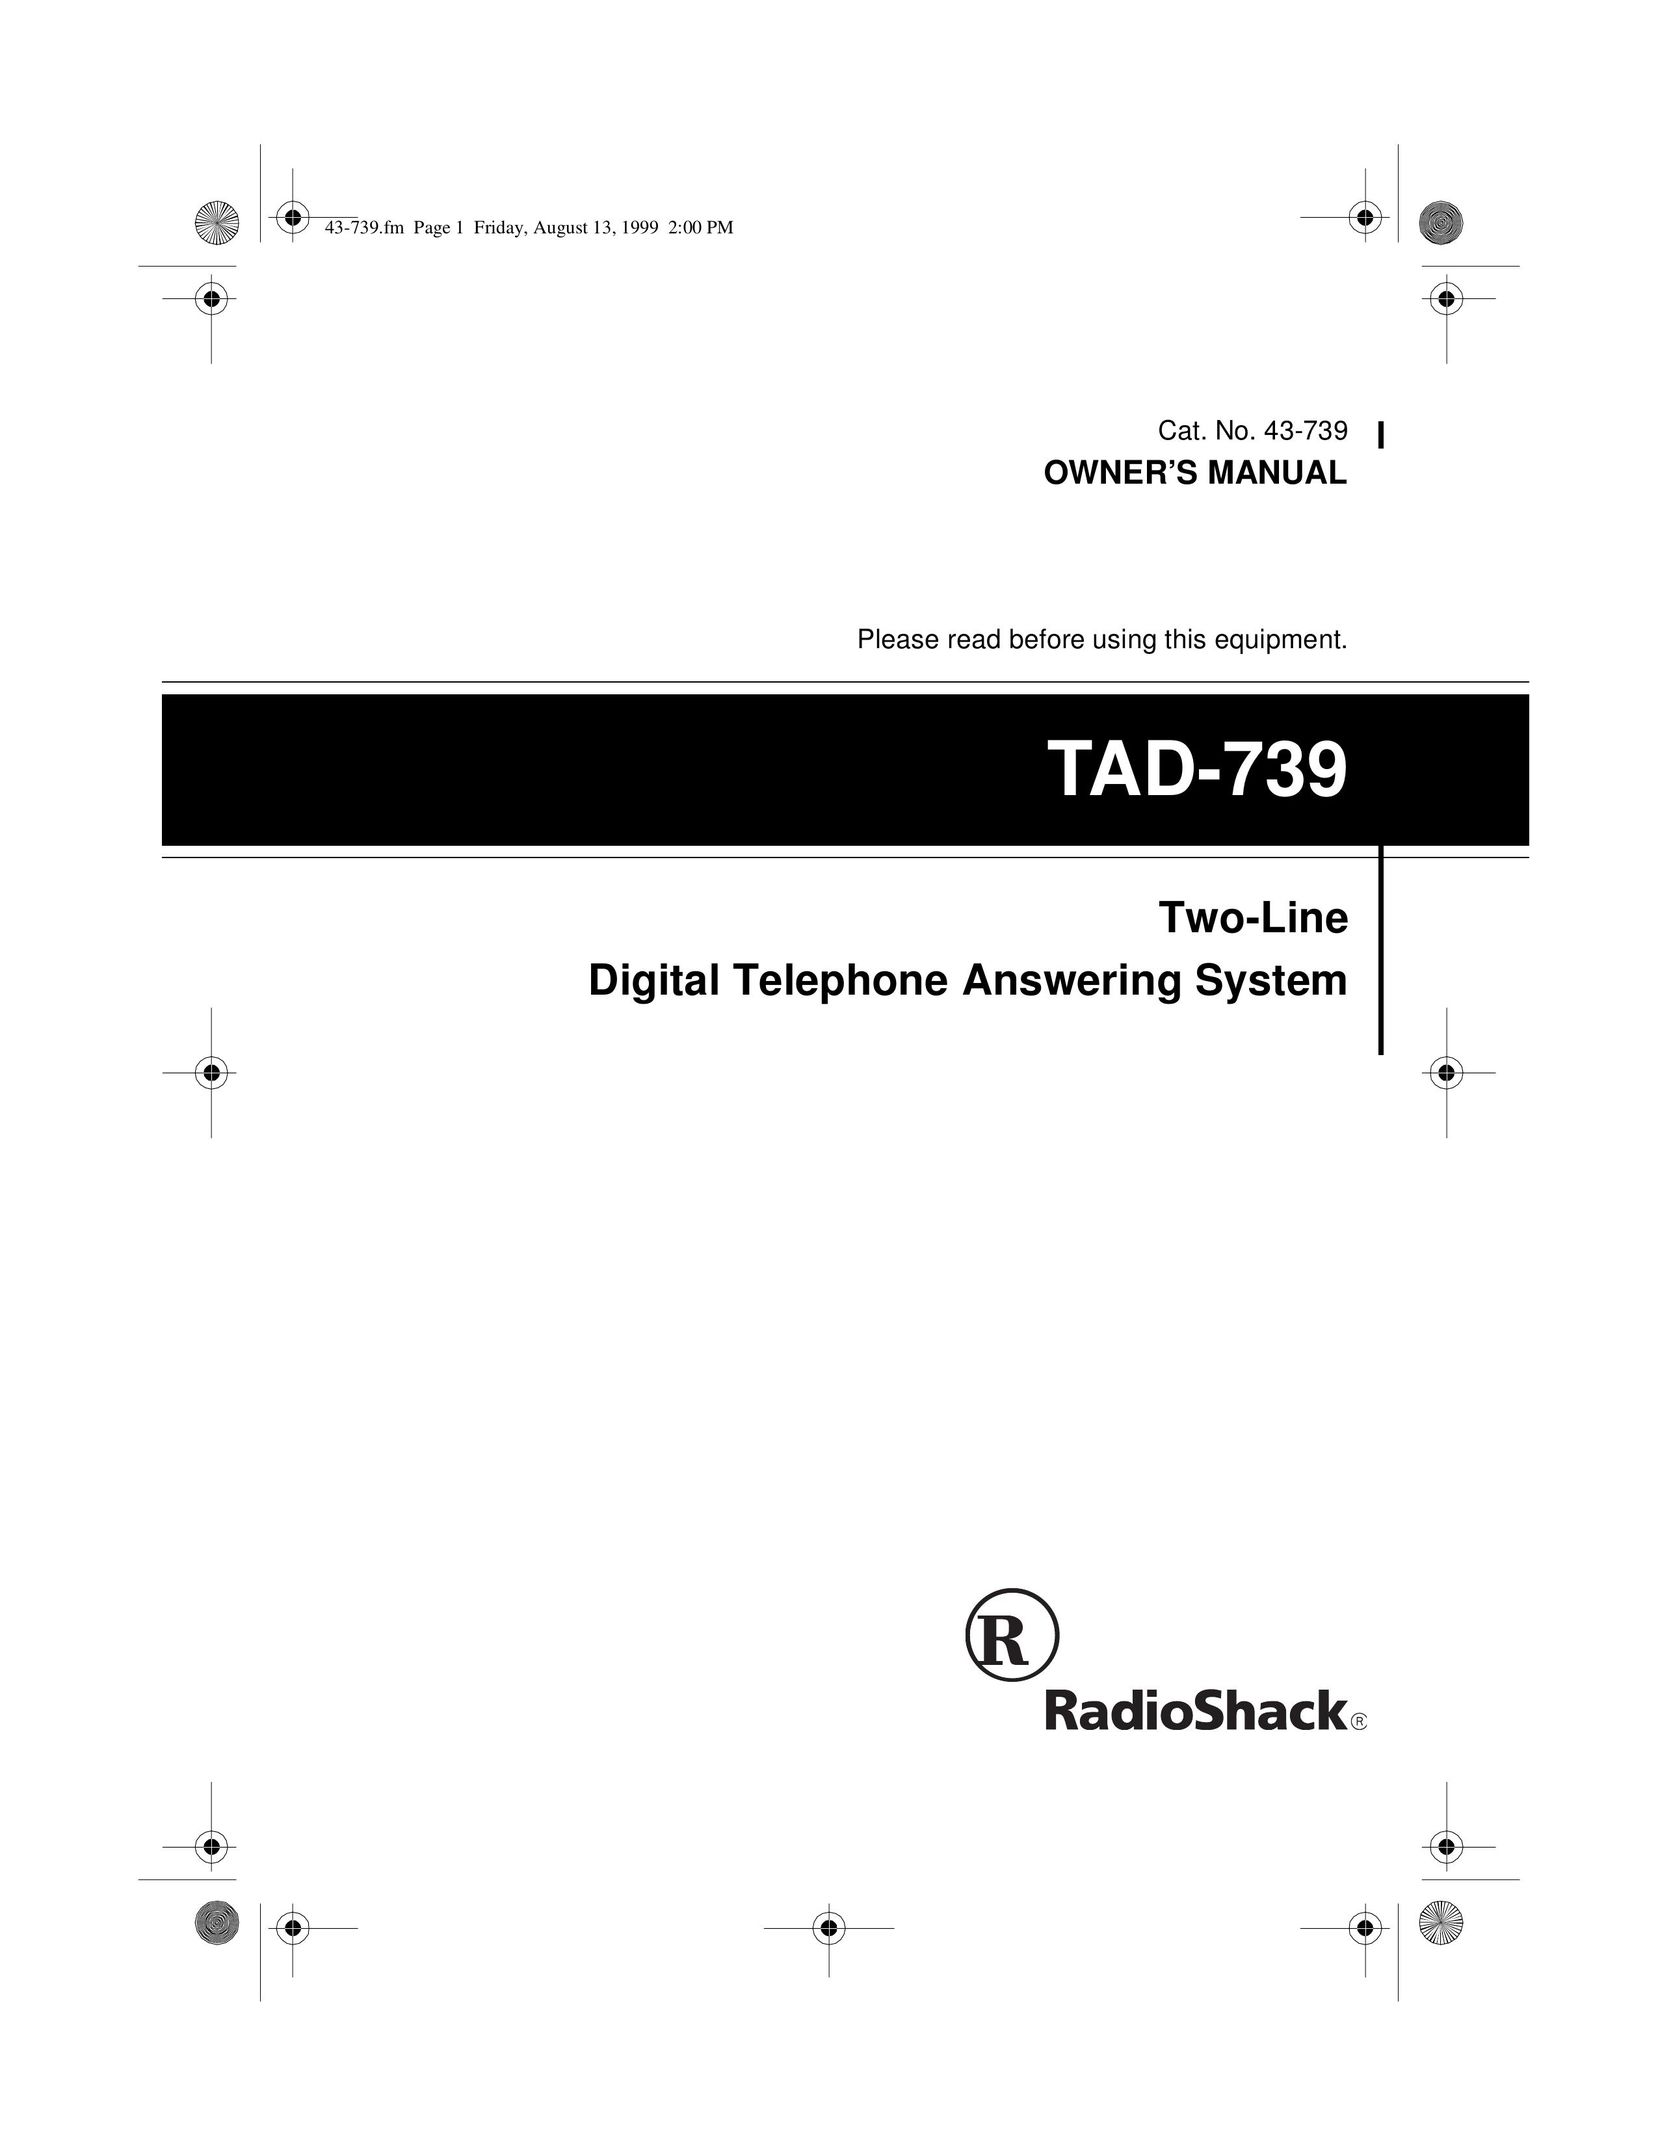 Radio Shack TAD-739 Answering Machine User Manual